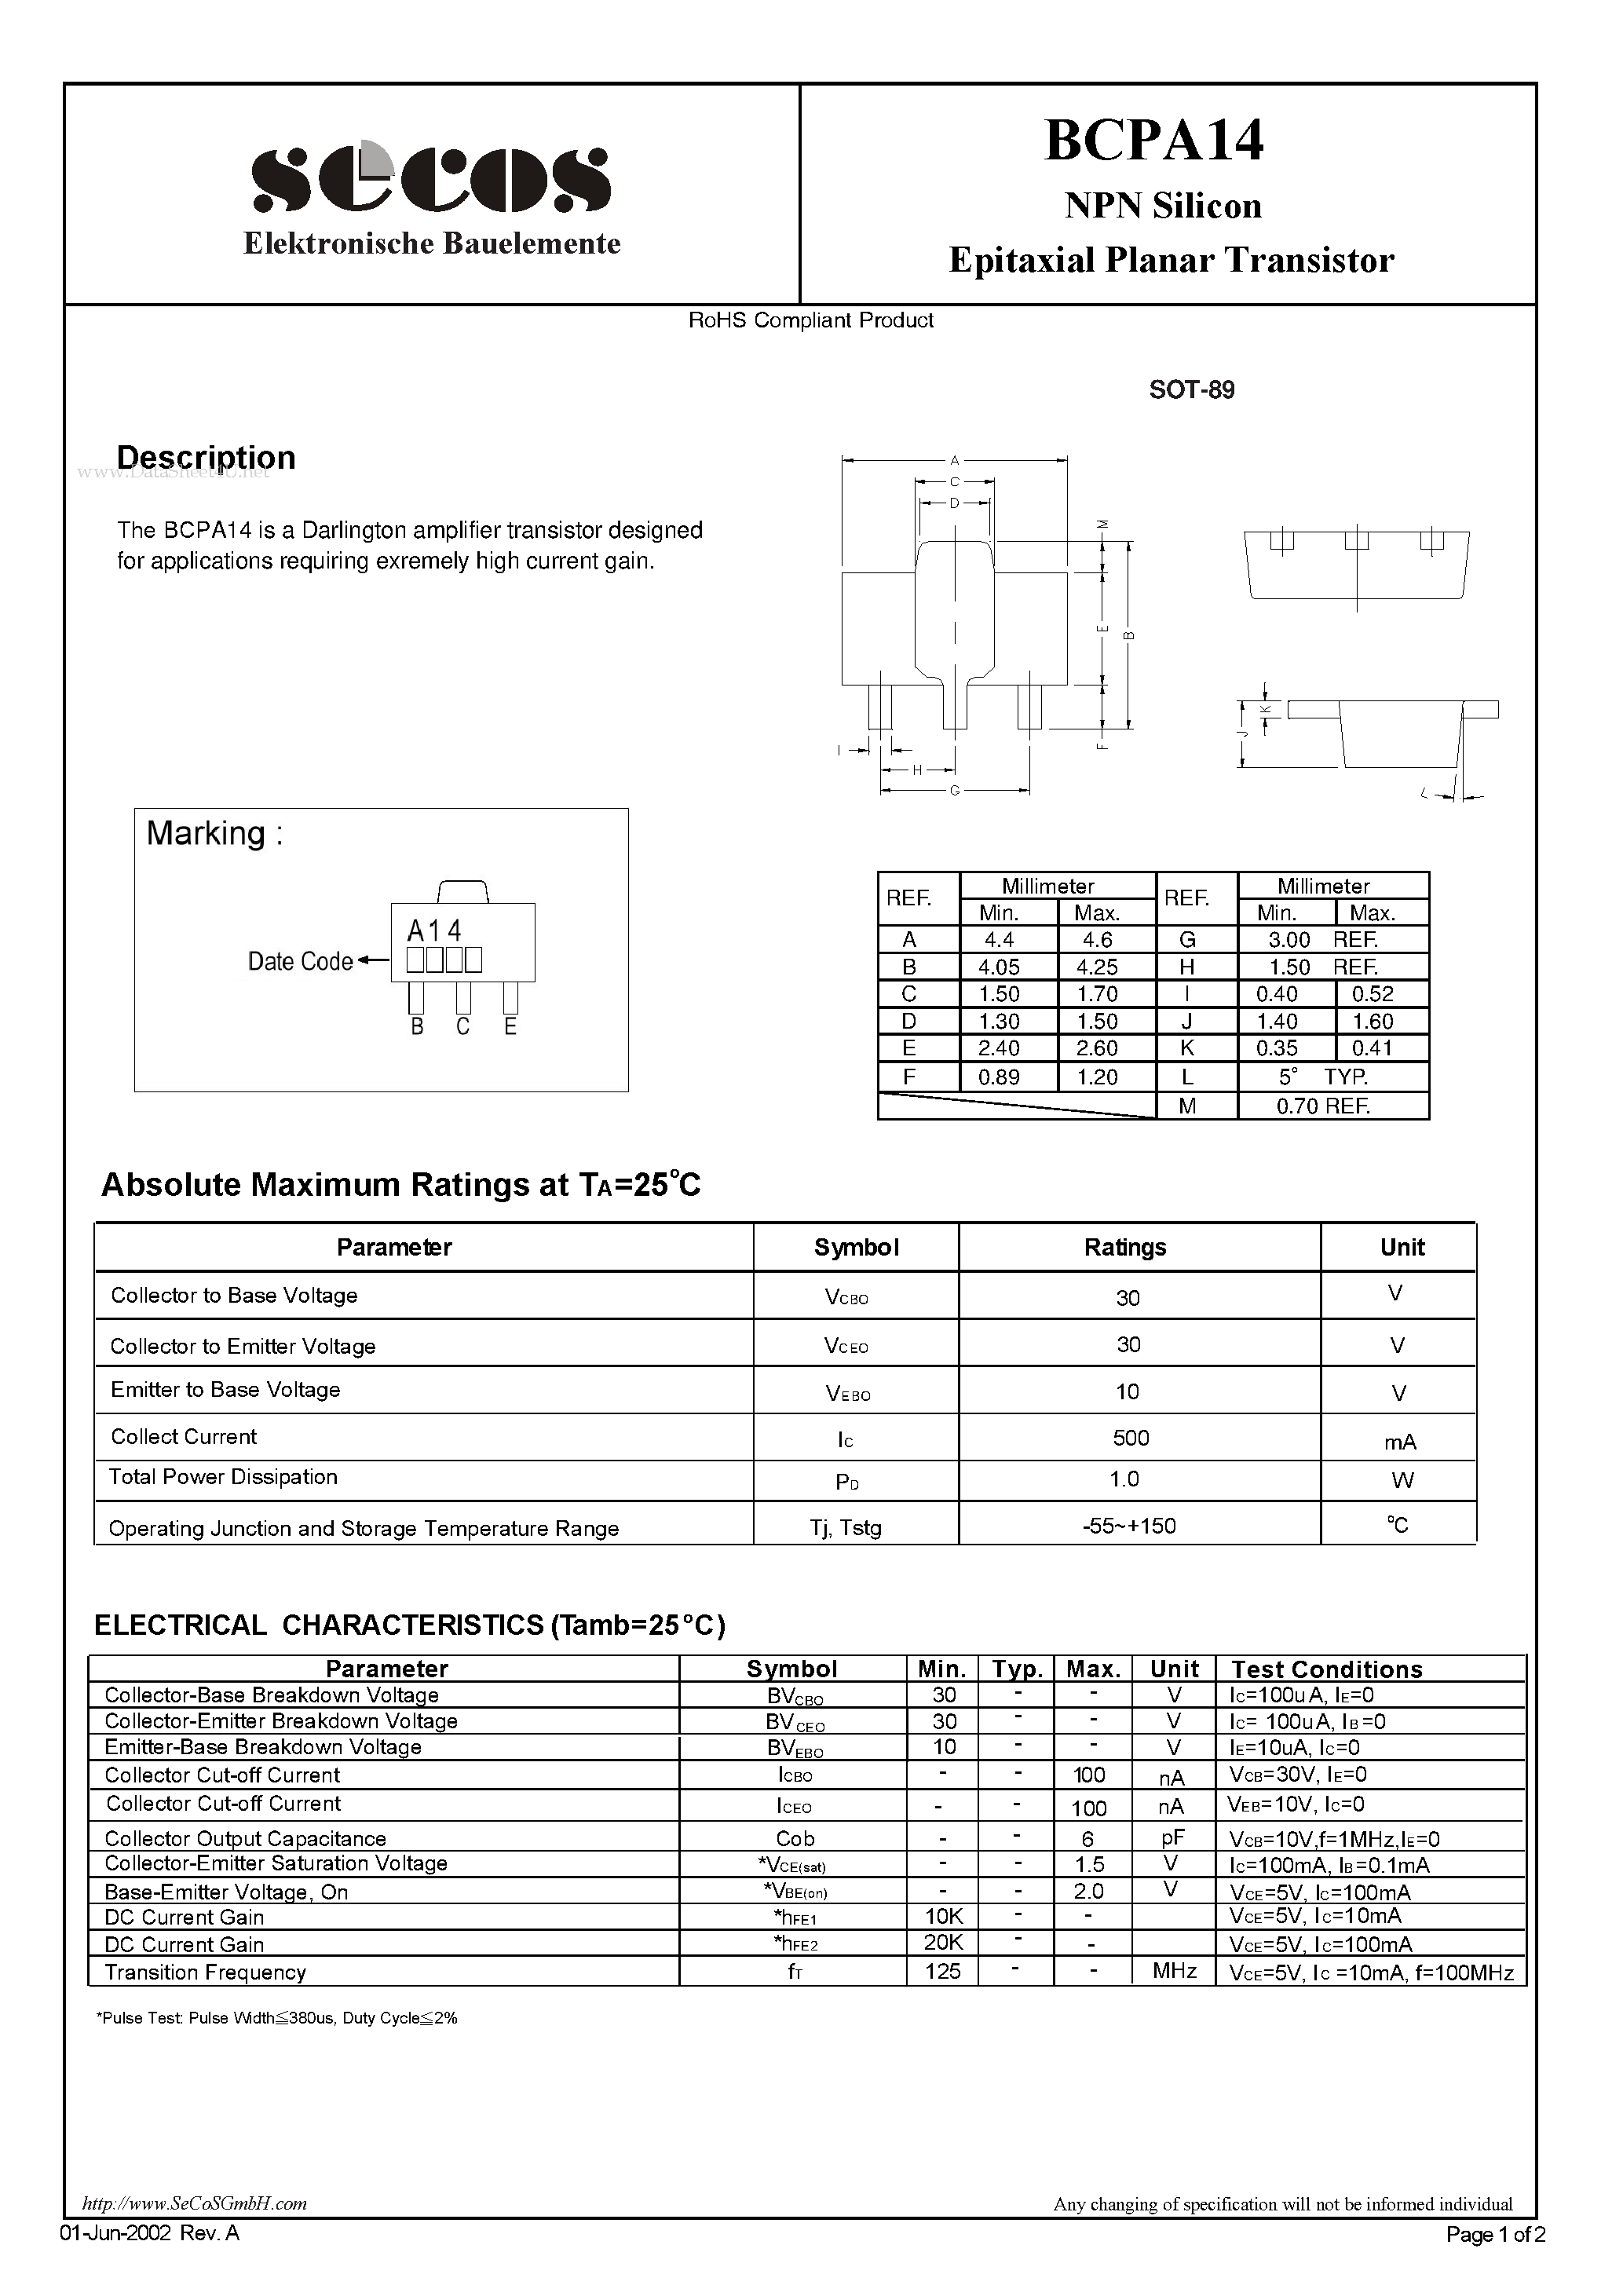 Даташит BCPA14 - Epitaxial Planar Transistor страница 1